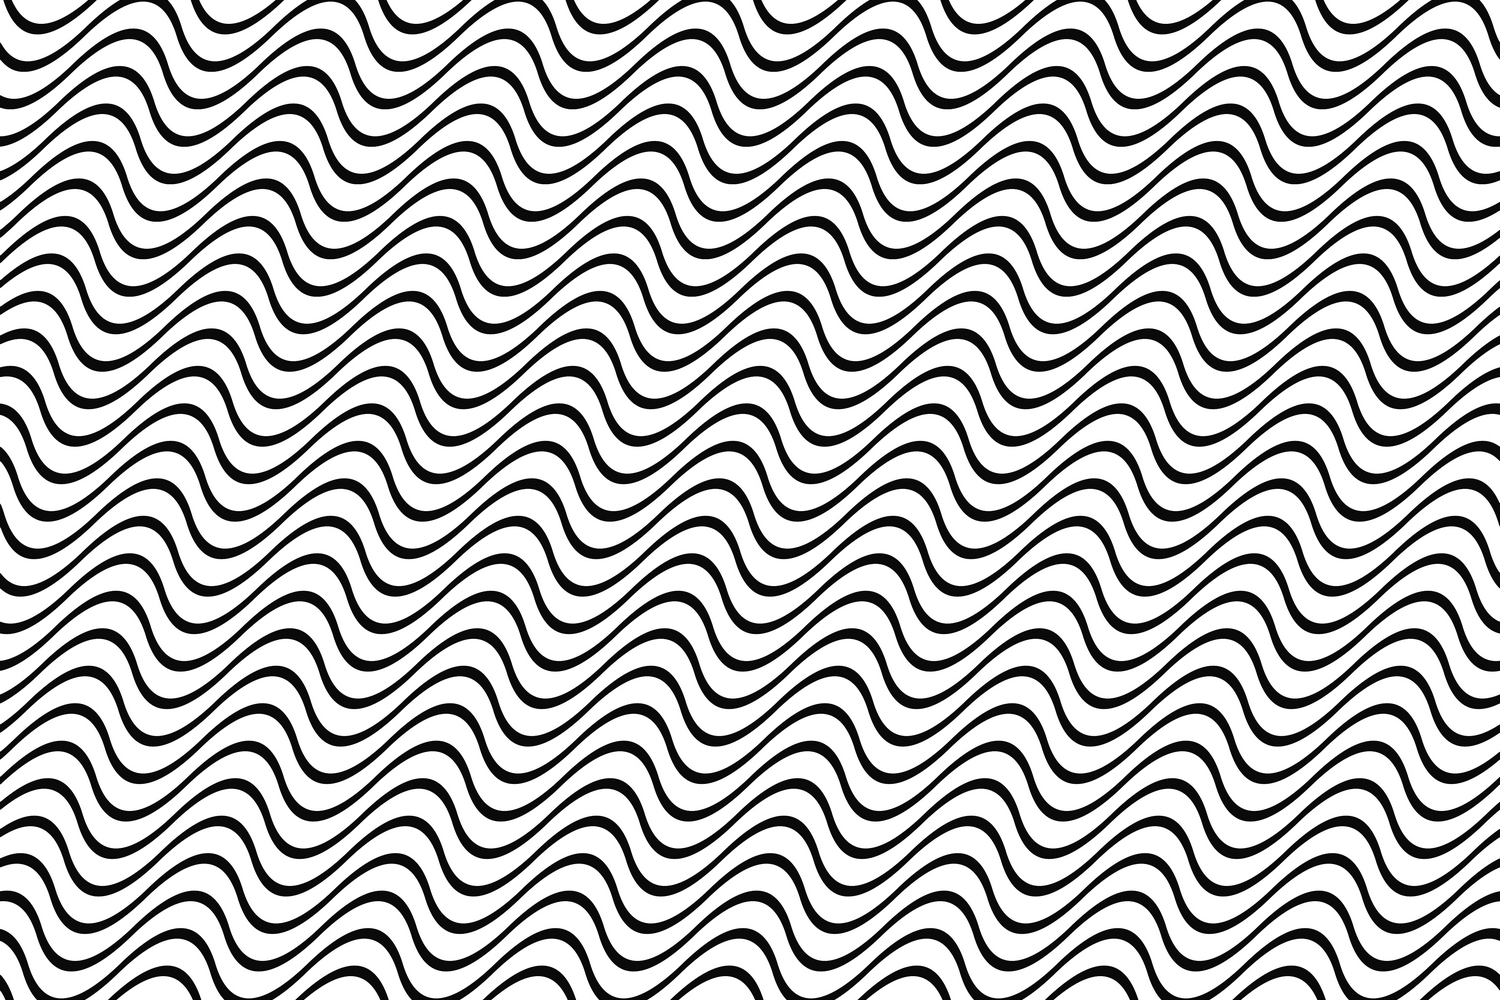 15 seamless wave line patterns (EPS, AI, SVG, JPG 5000x5000)
 Line Pattern Design